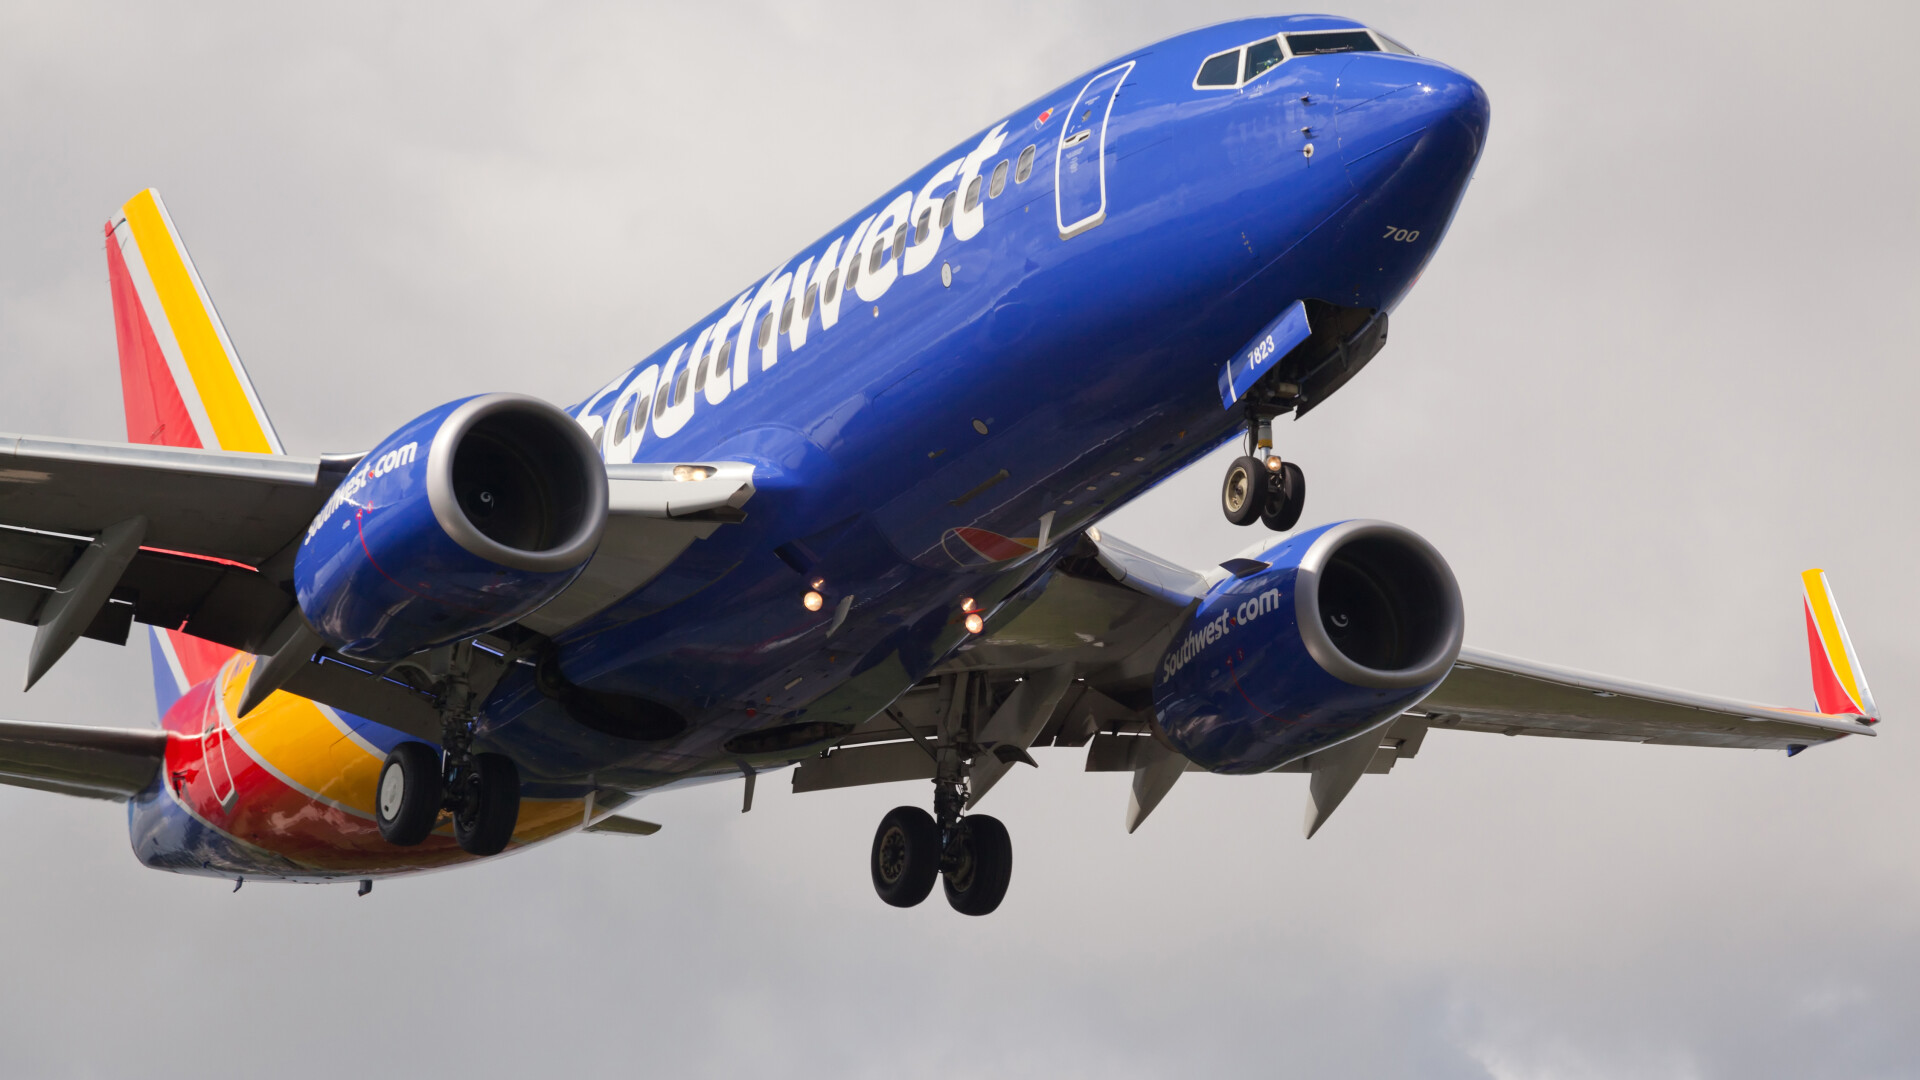 Southwest avion - Shutterstock